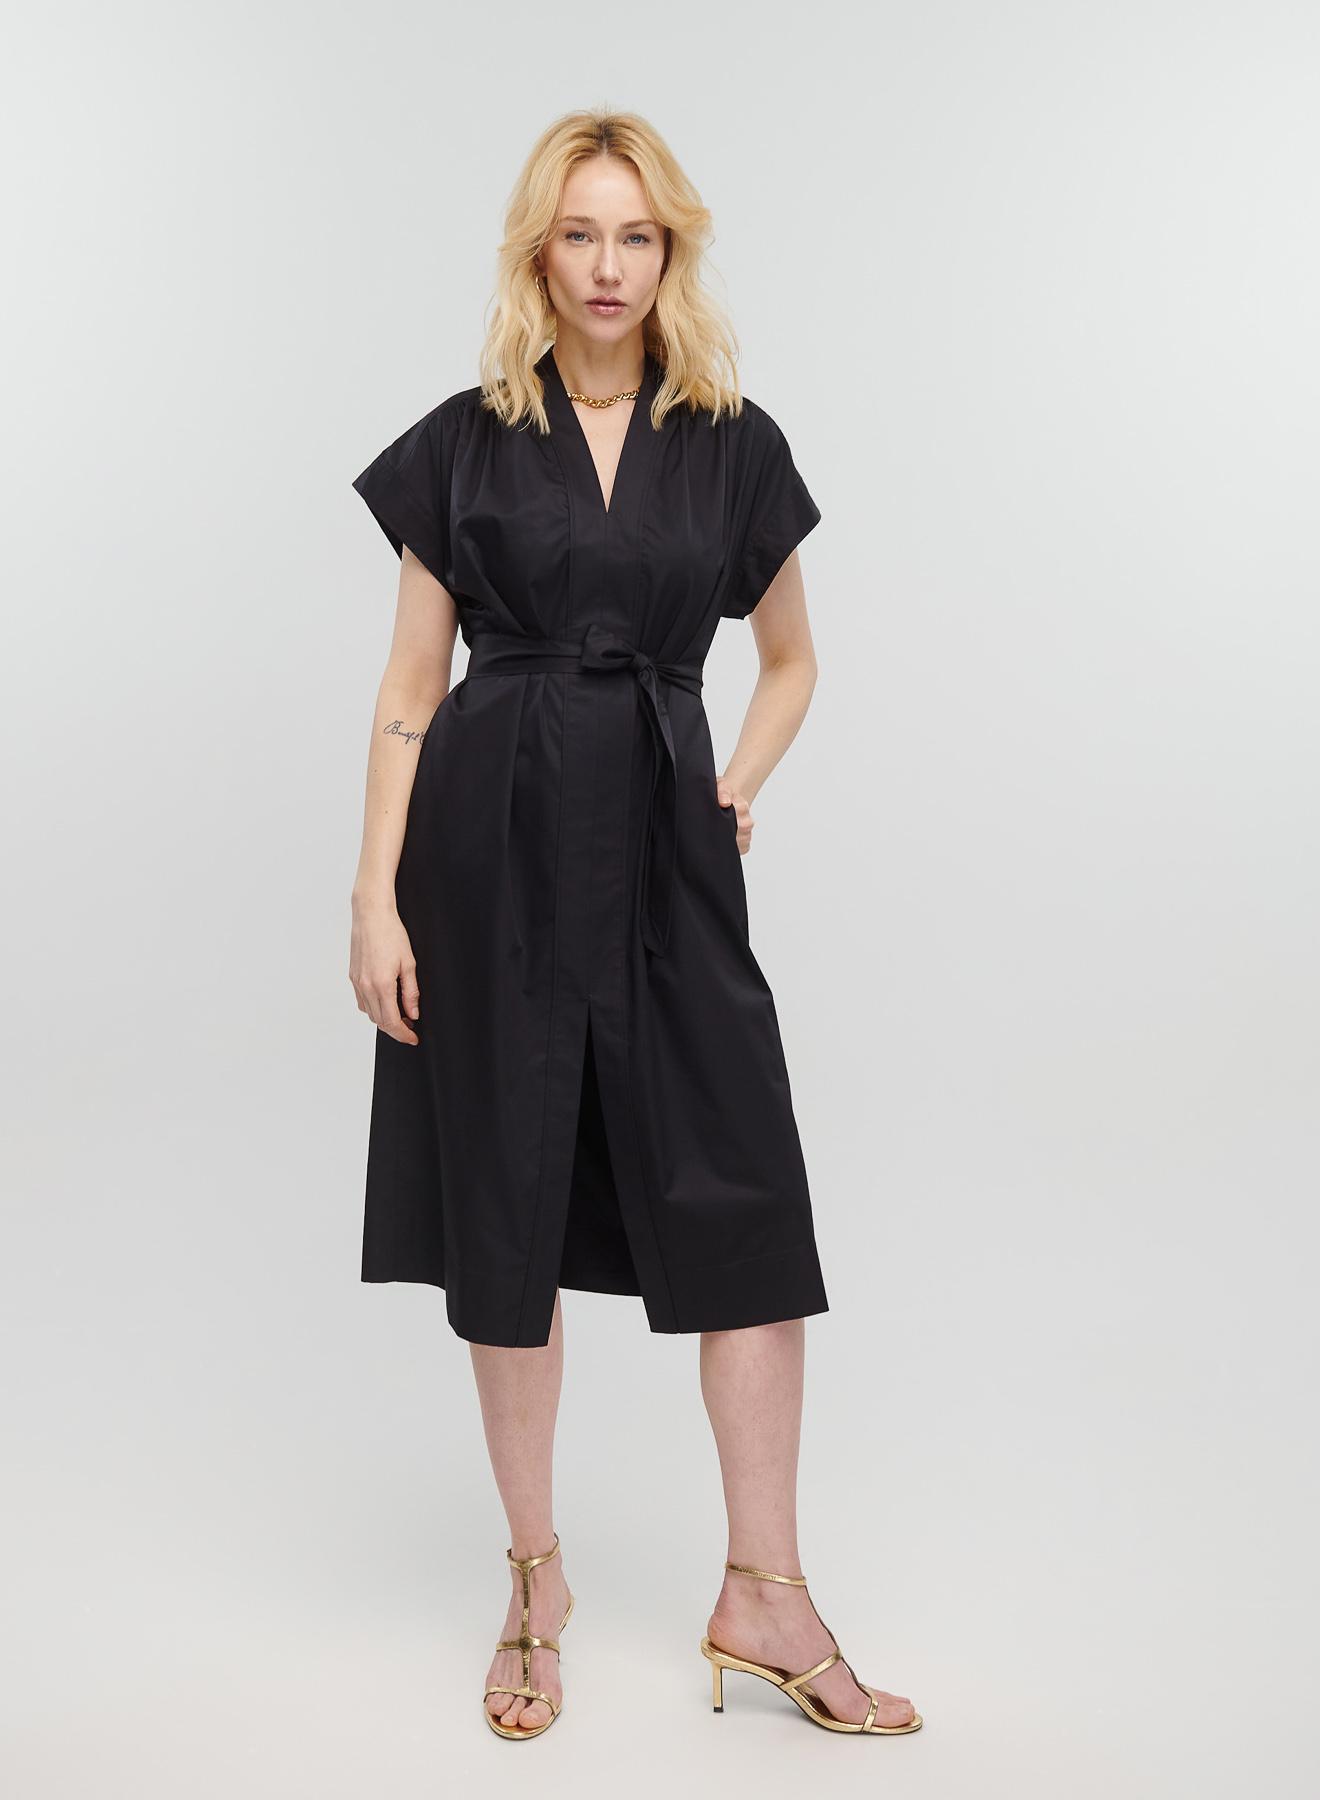 Black long sleeveless Dress with V neckline, belt and front slit Milla - 1